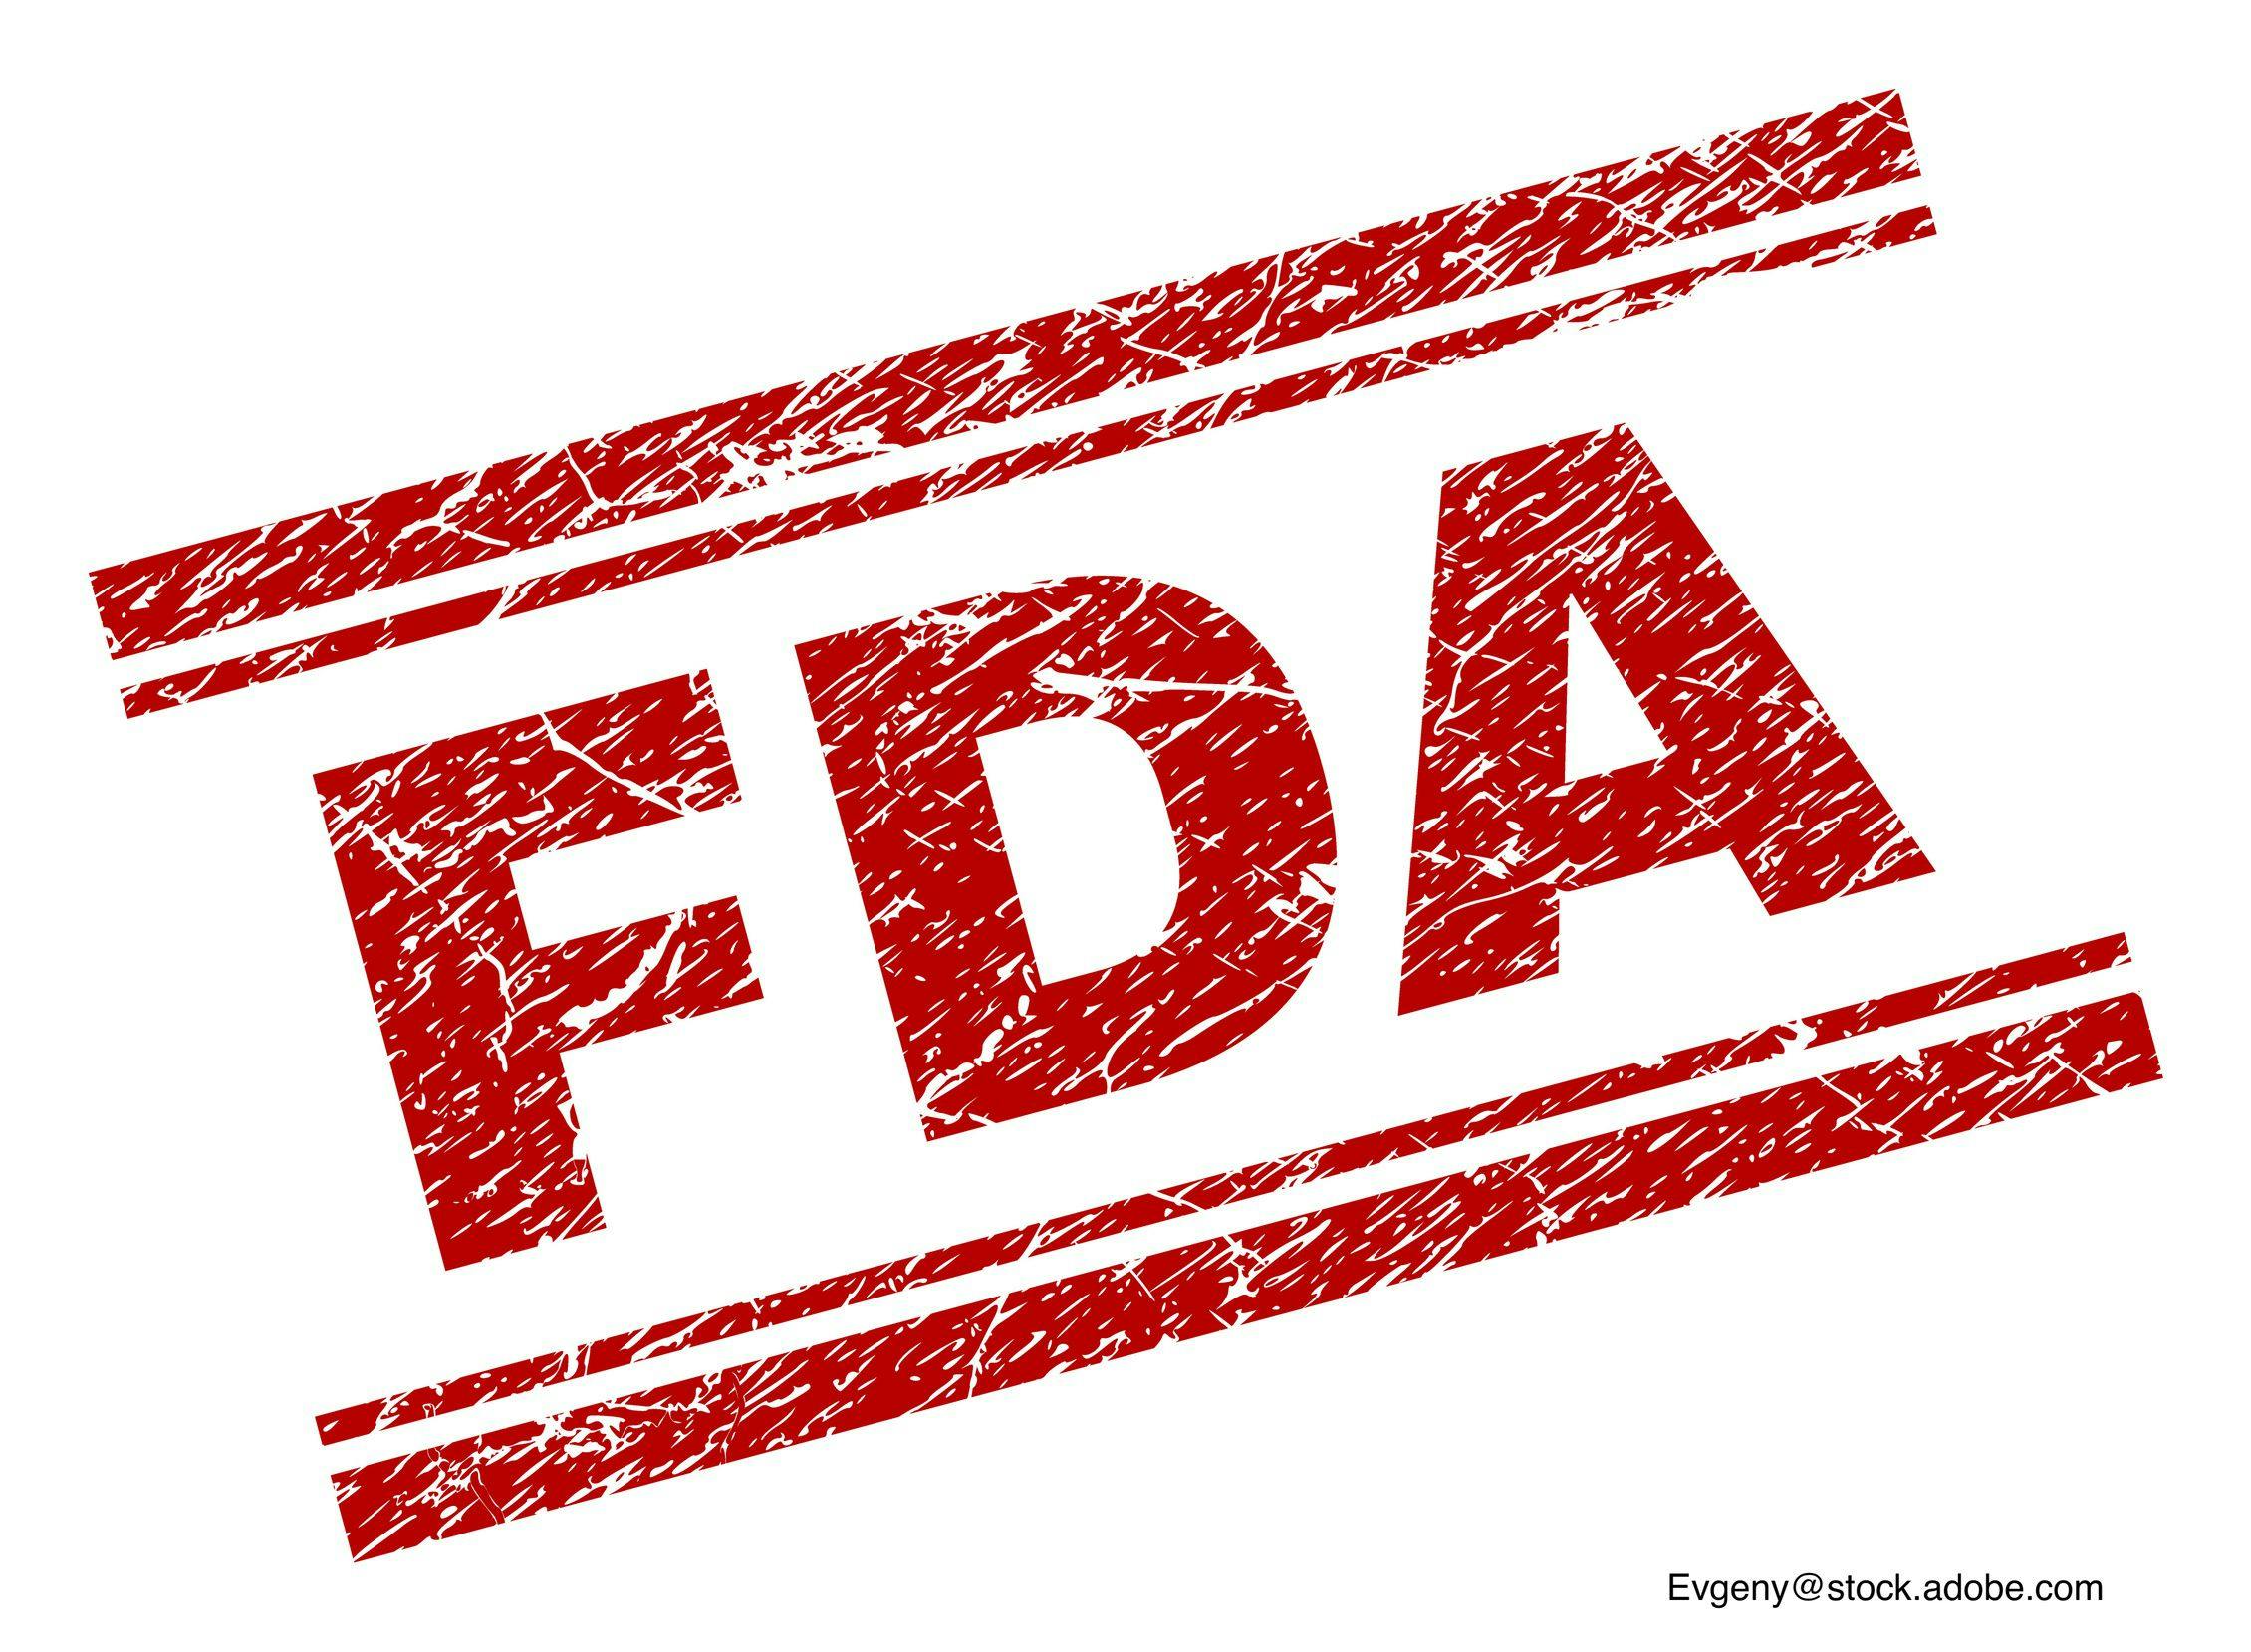 Fecal Microbiota Product Rebyota Receives FDA Approval